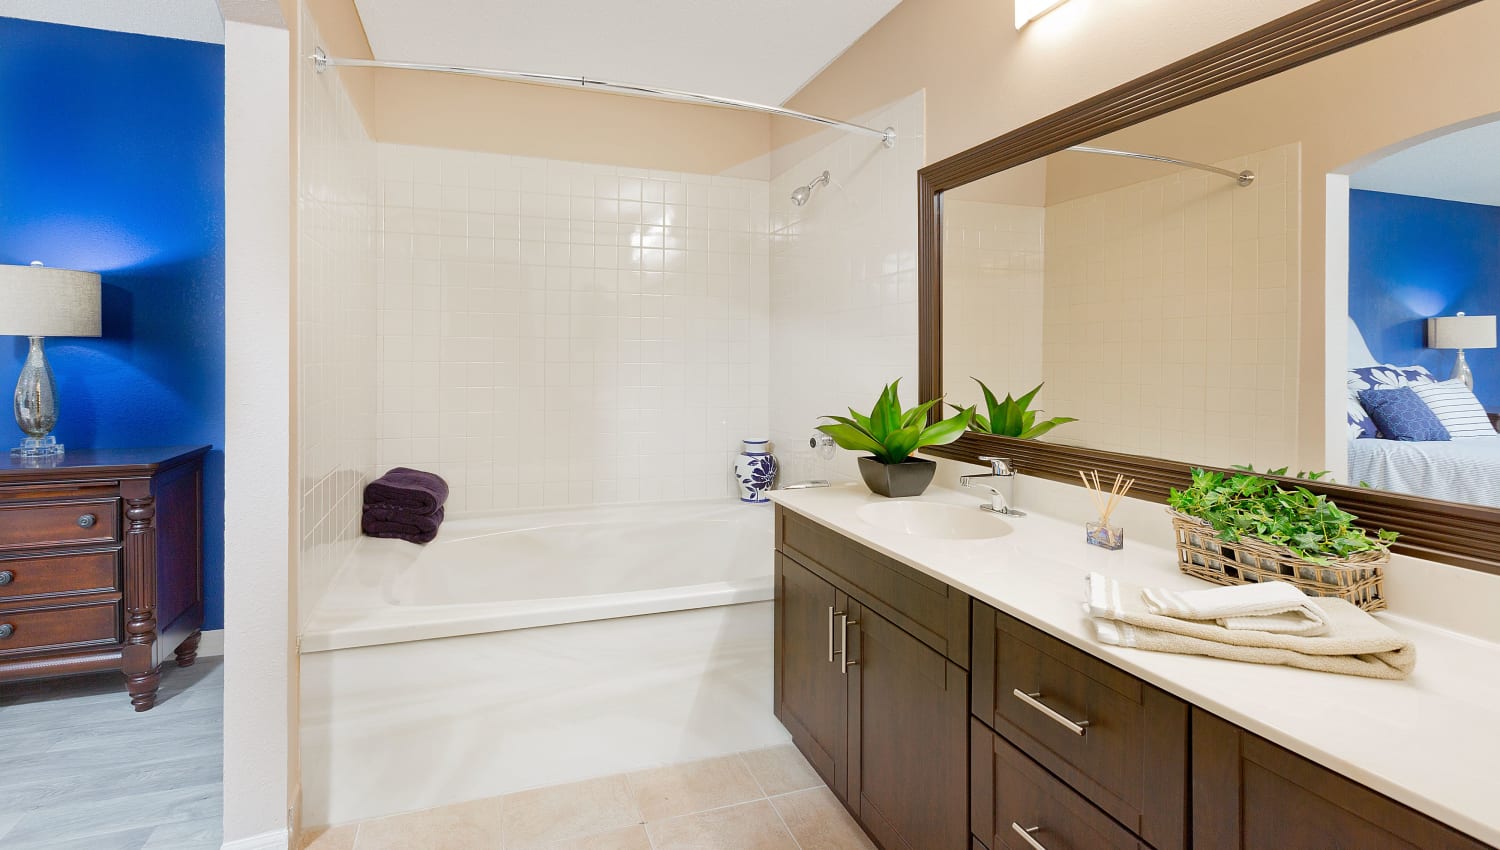 Primary bathroom with tub at Indian Hills Apartments in Boynton Beach, Florida